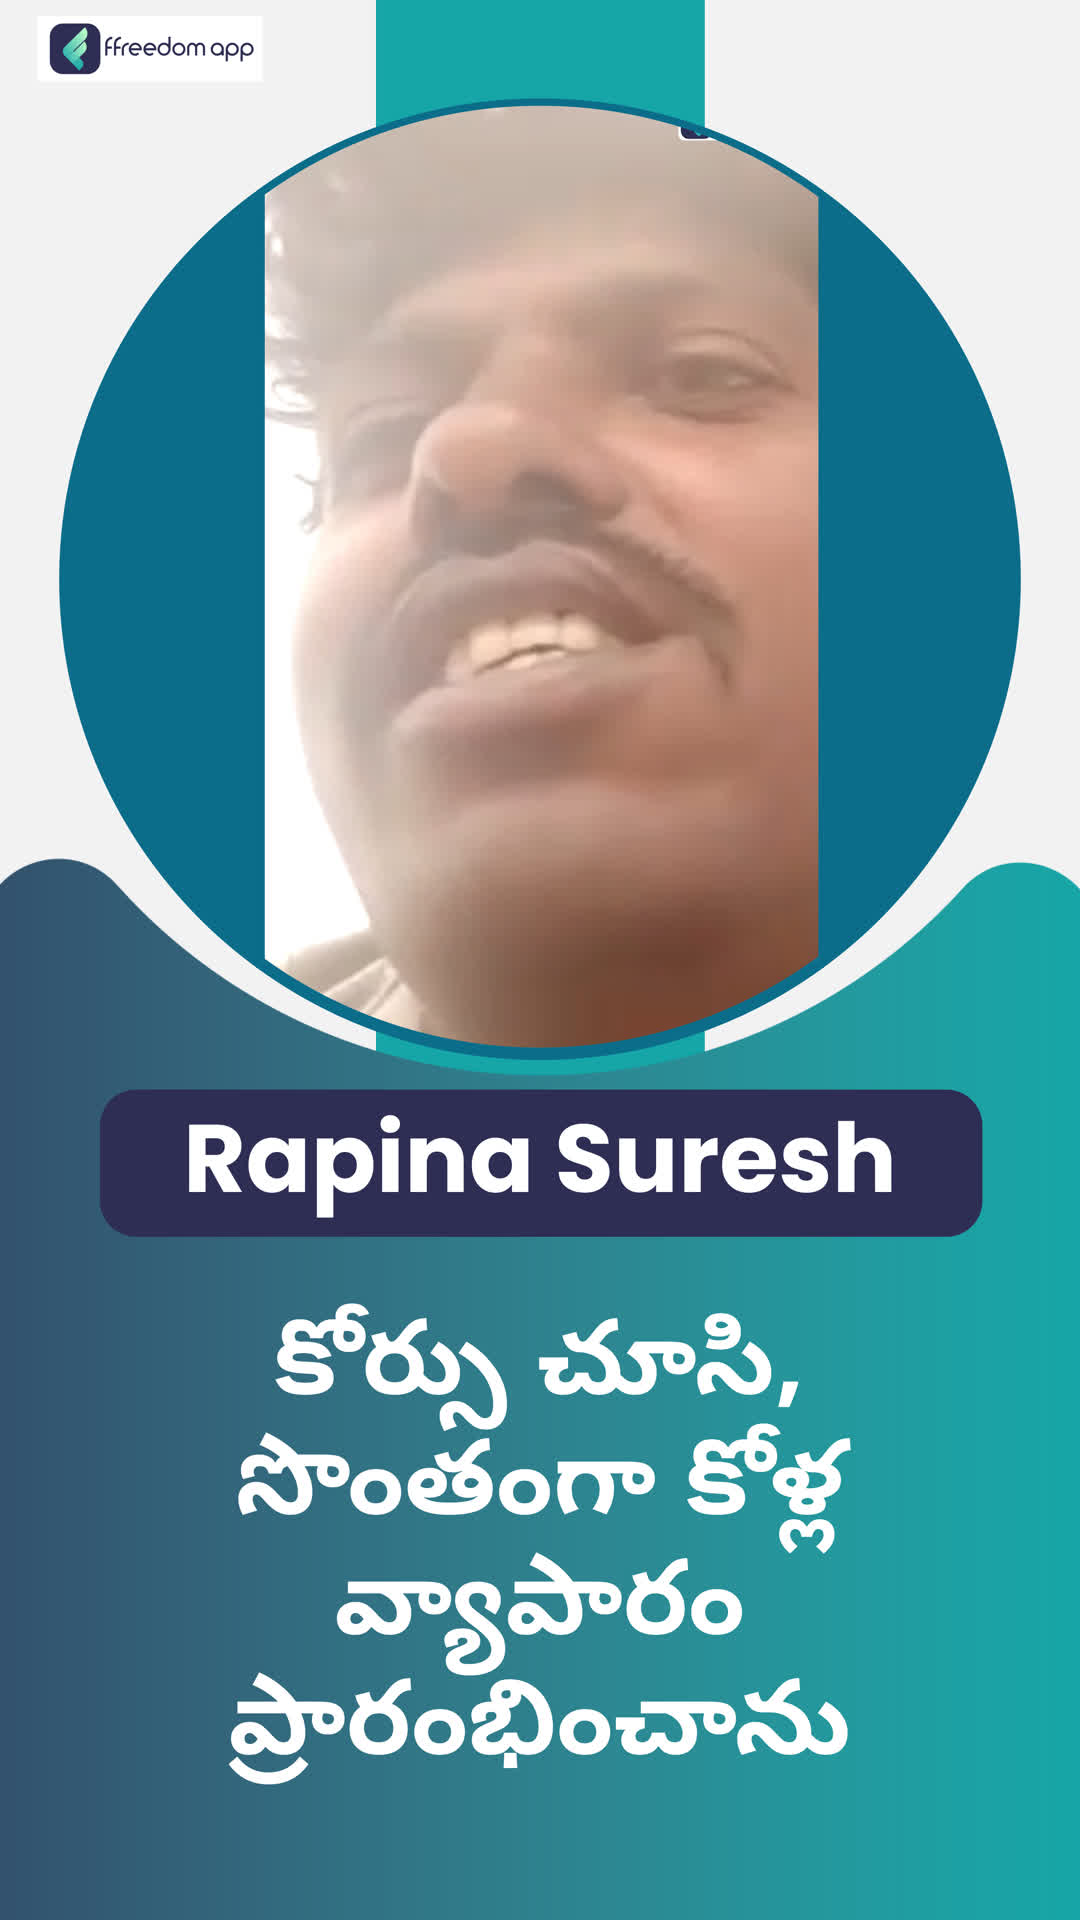 Rapina Suresh's Honest Review of ffreedom app - Nellore - Sri Potti Sriramulu ,Andhra Pradesh